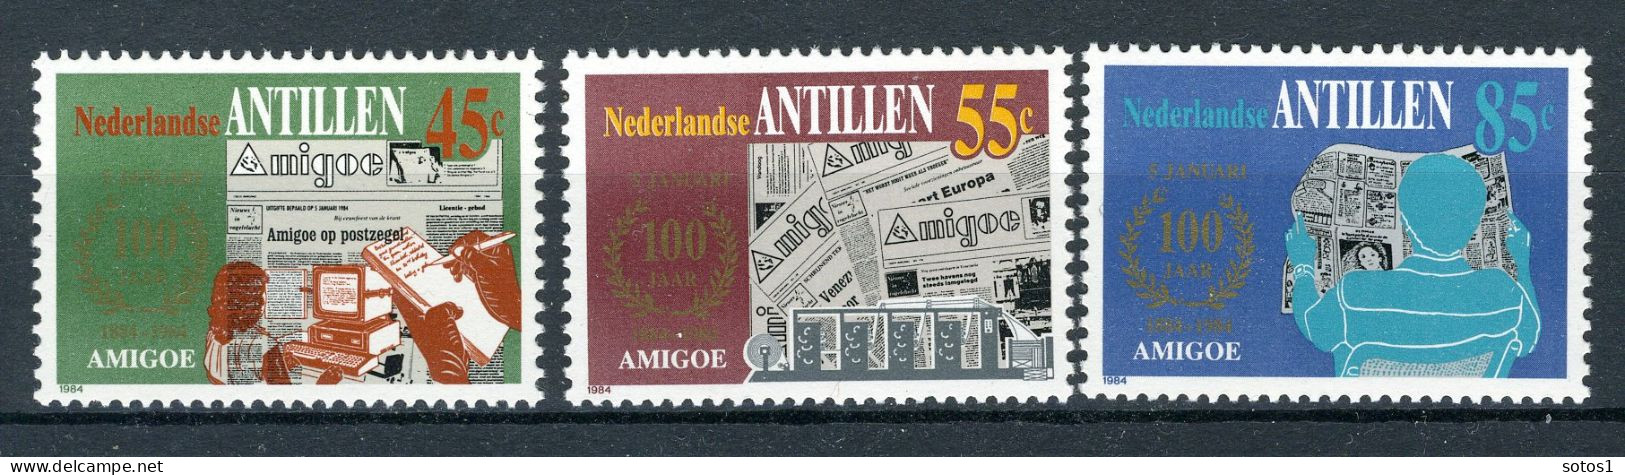 NL. ANTILLEN 764/766 MNH 1984 - 100 Jaar Dagblad Amigoe Di Curaçao. - Curacao, Netherlands Antilles, Aruba